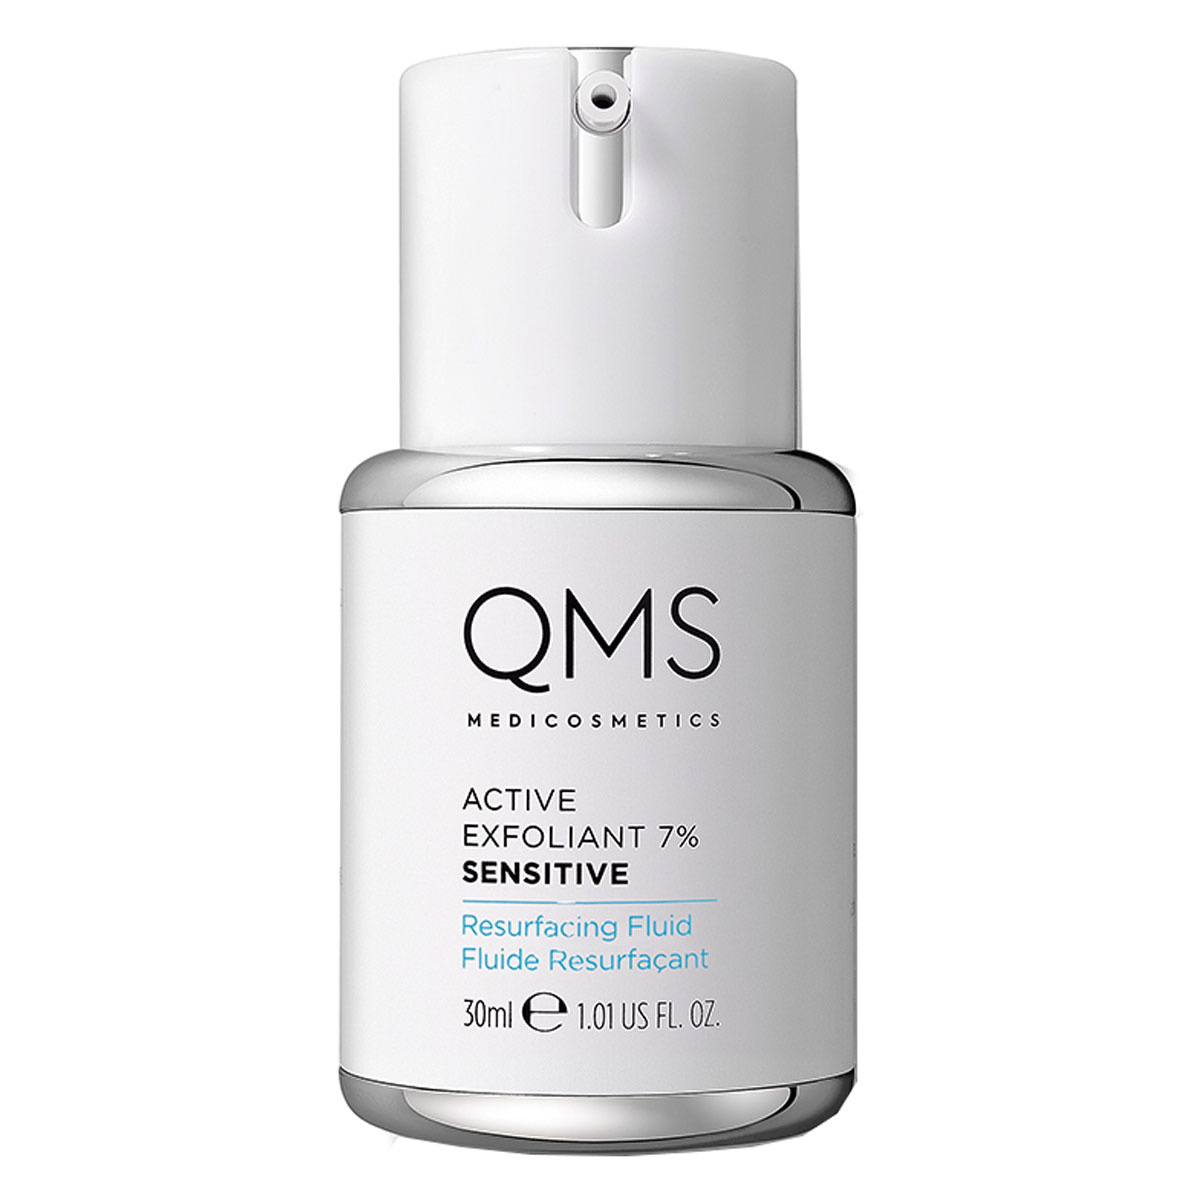 a bottle of qms active exfoliant seven percent exfoliator for sensitive skin